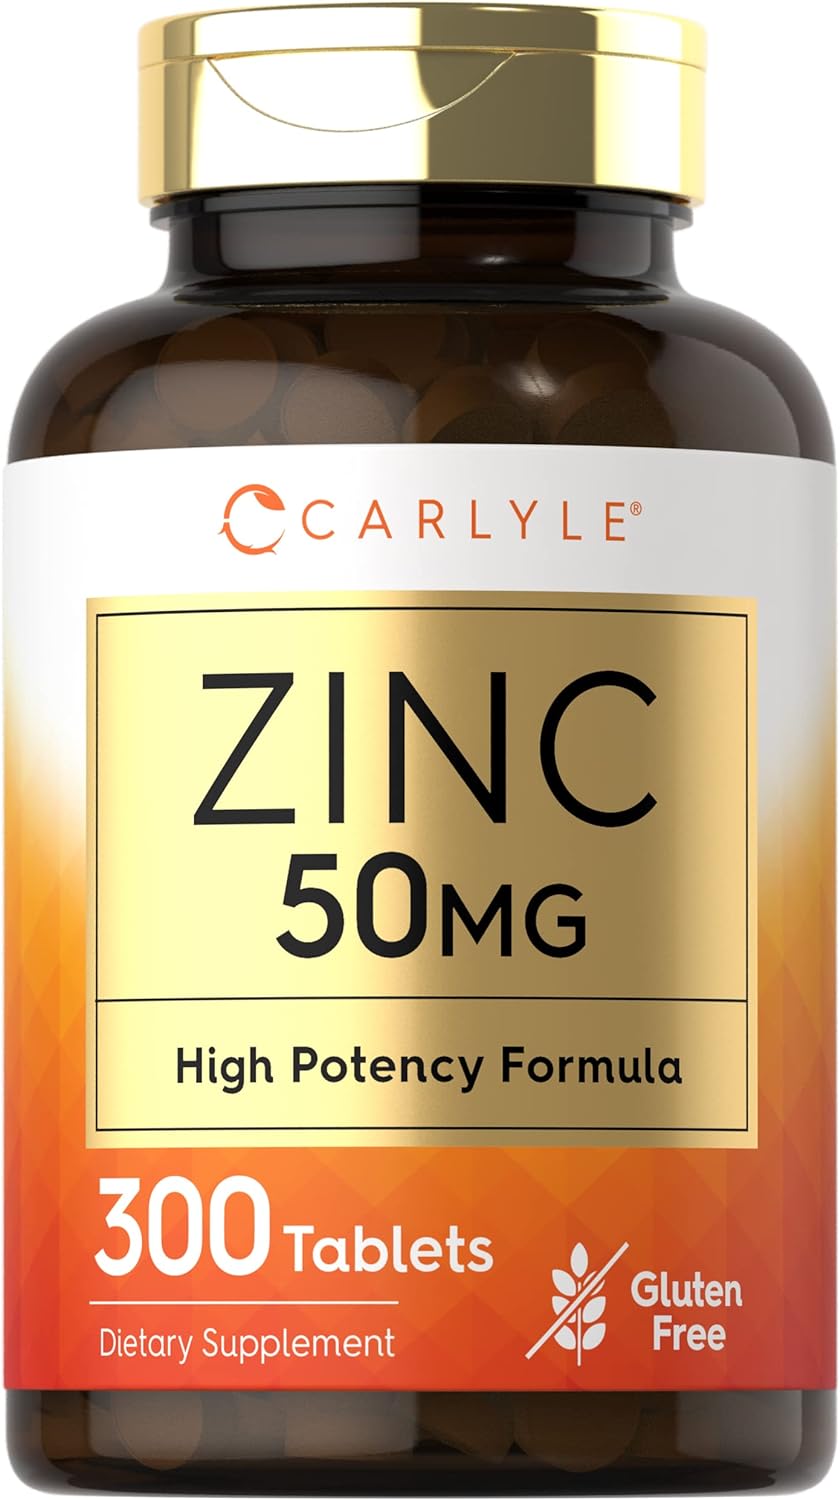 Zinc 50mg | 300 Tablets | Vegetarian, Non-GMO, and Gluten Free Supplem